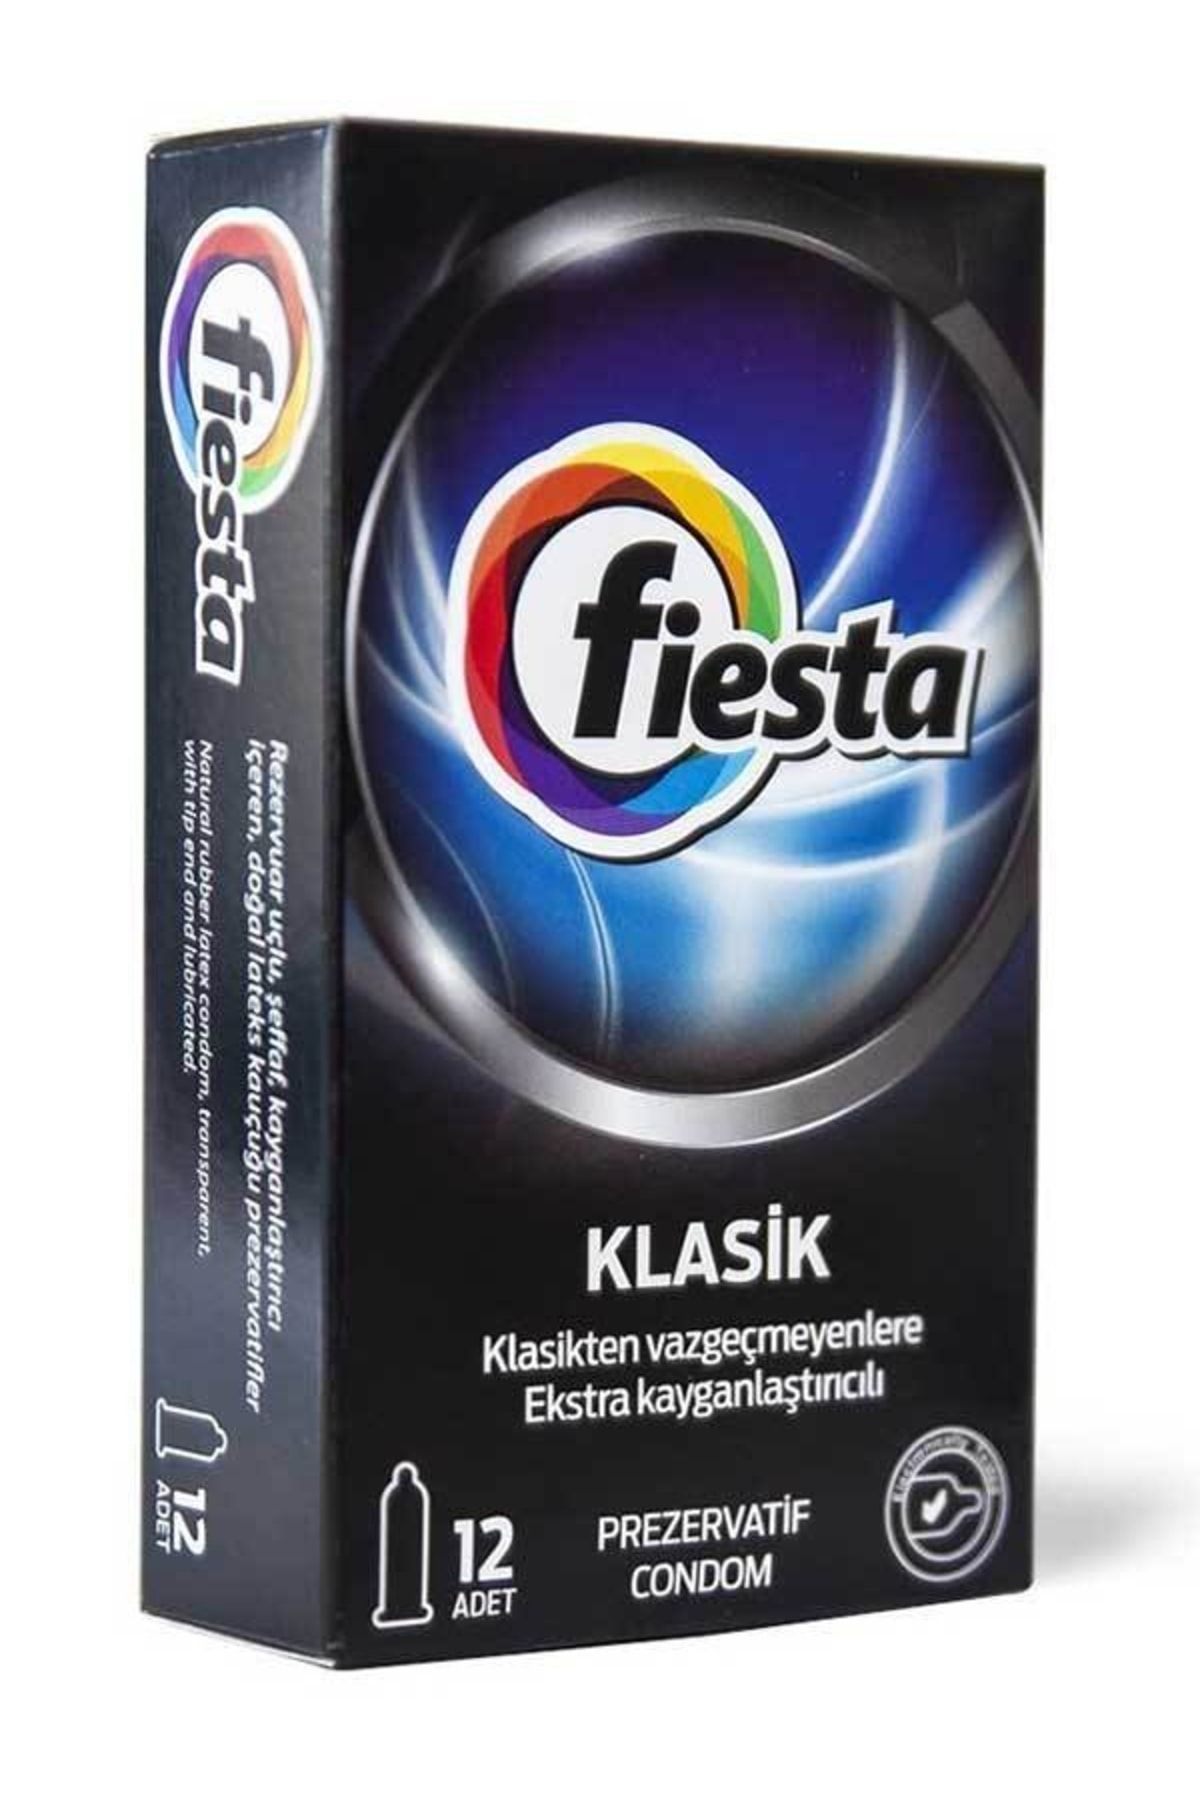 Fiesta Censan Klasik Prezervatif